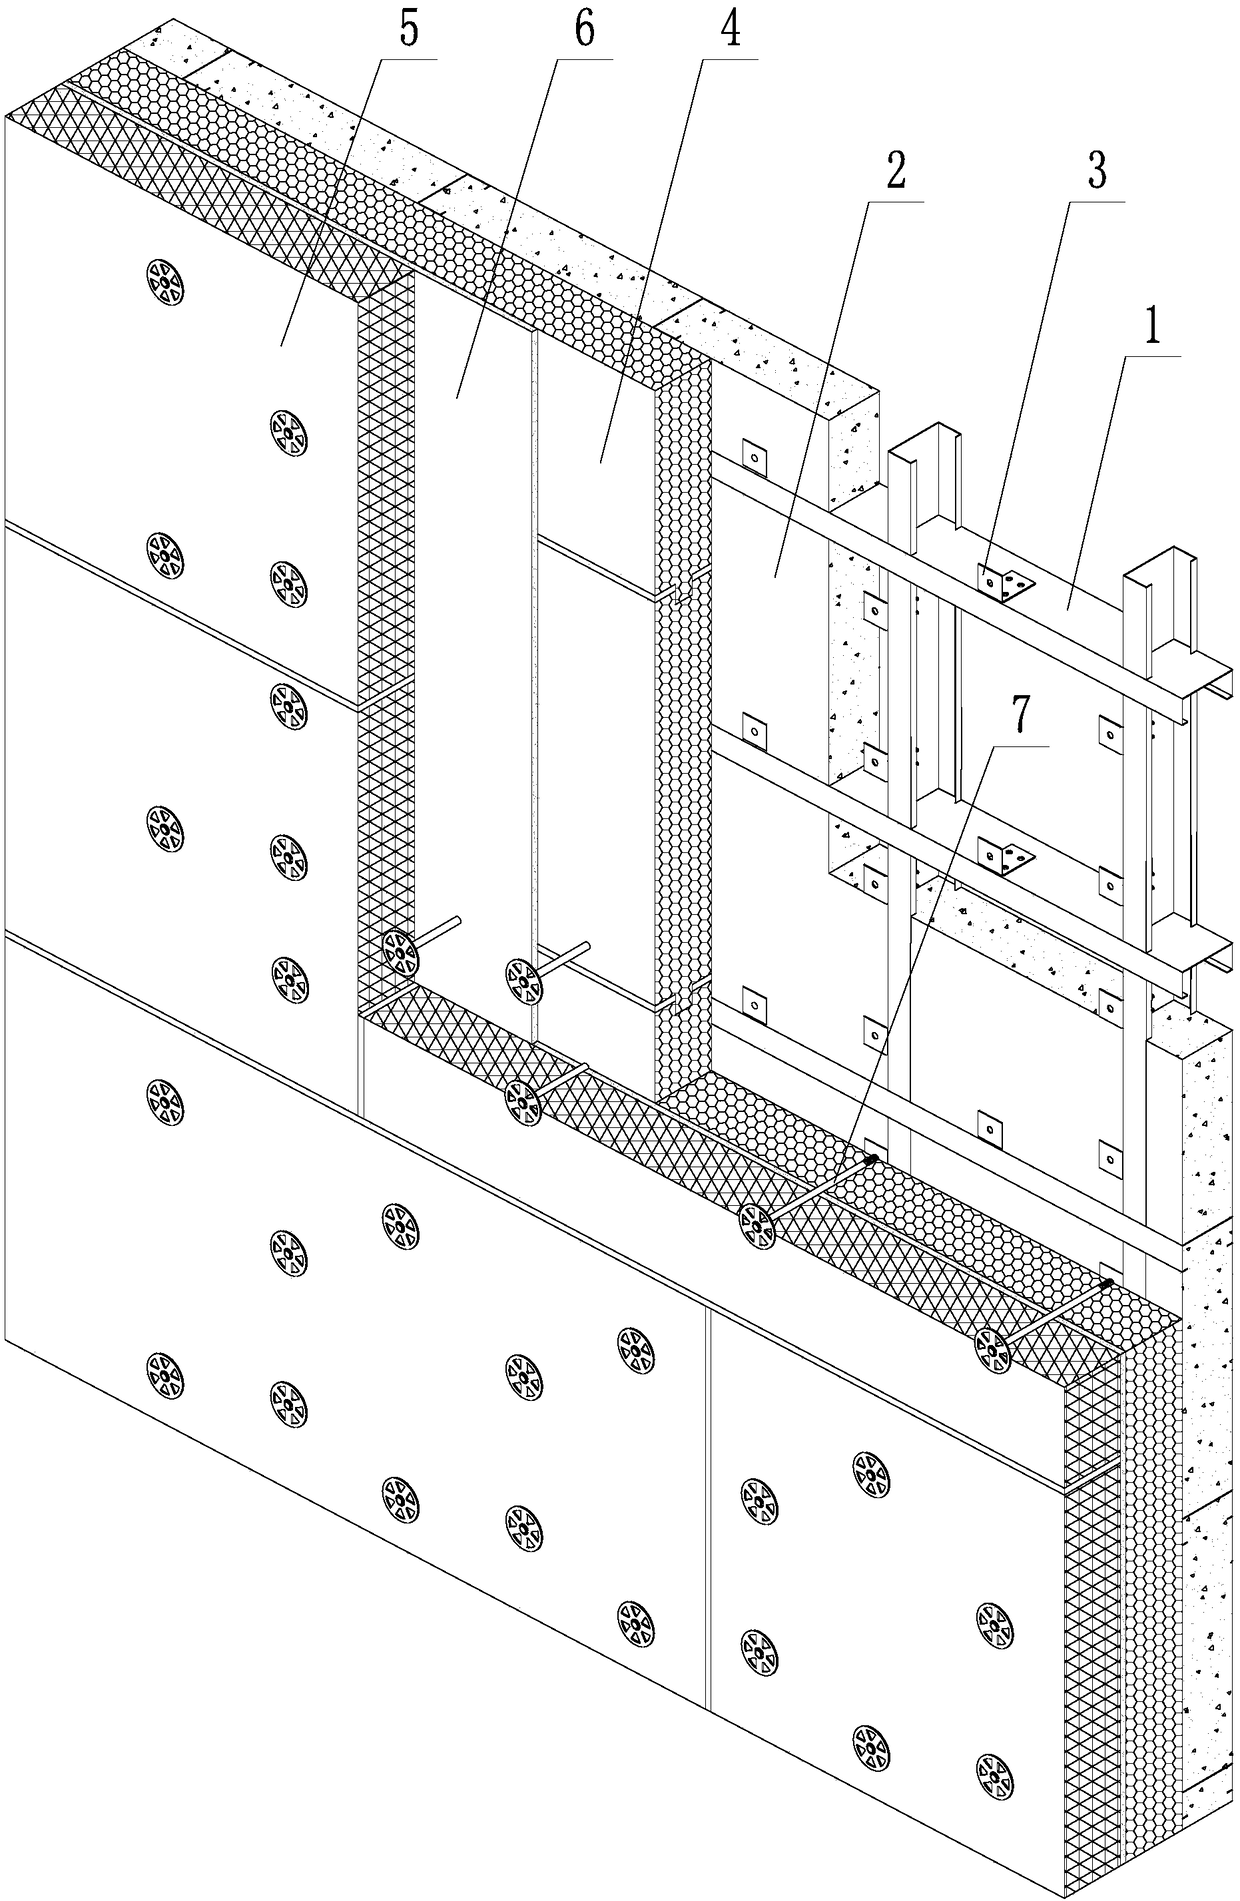 Cavity-free composite heat-insulation thermal-break bridge structure and construction method